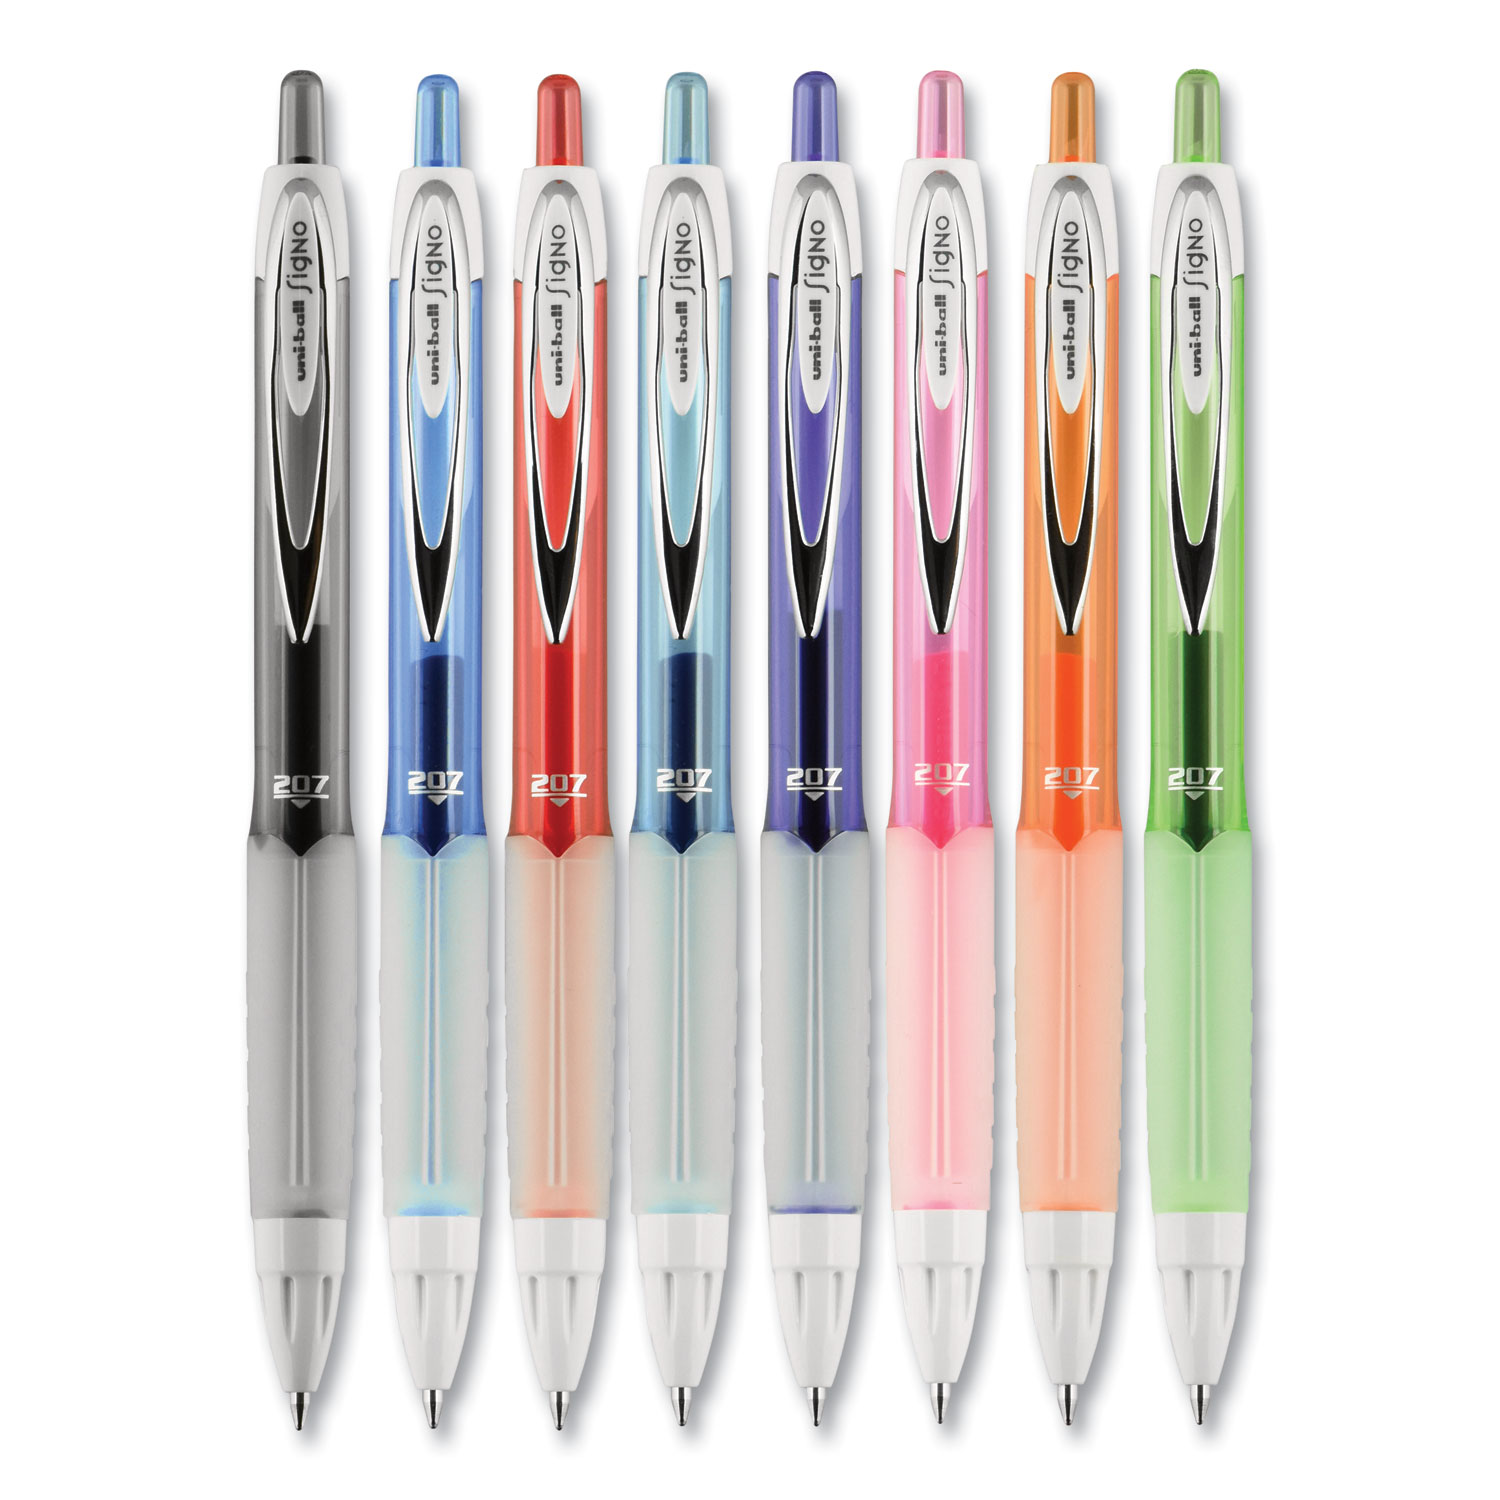 Uniball 207 Retractable Gel Pens, Medium Point (0.7mm), Assorted Ink, 8  Count 